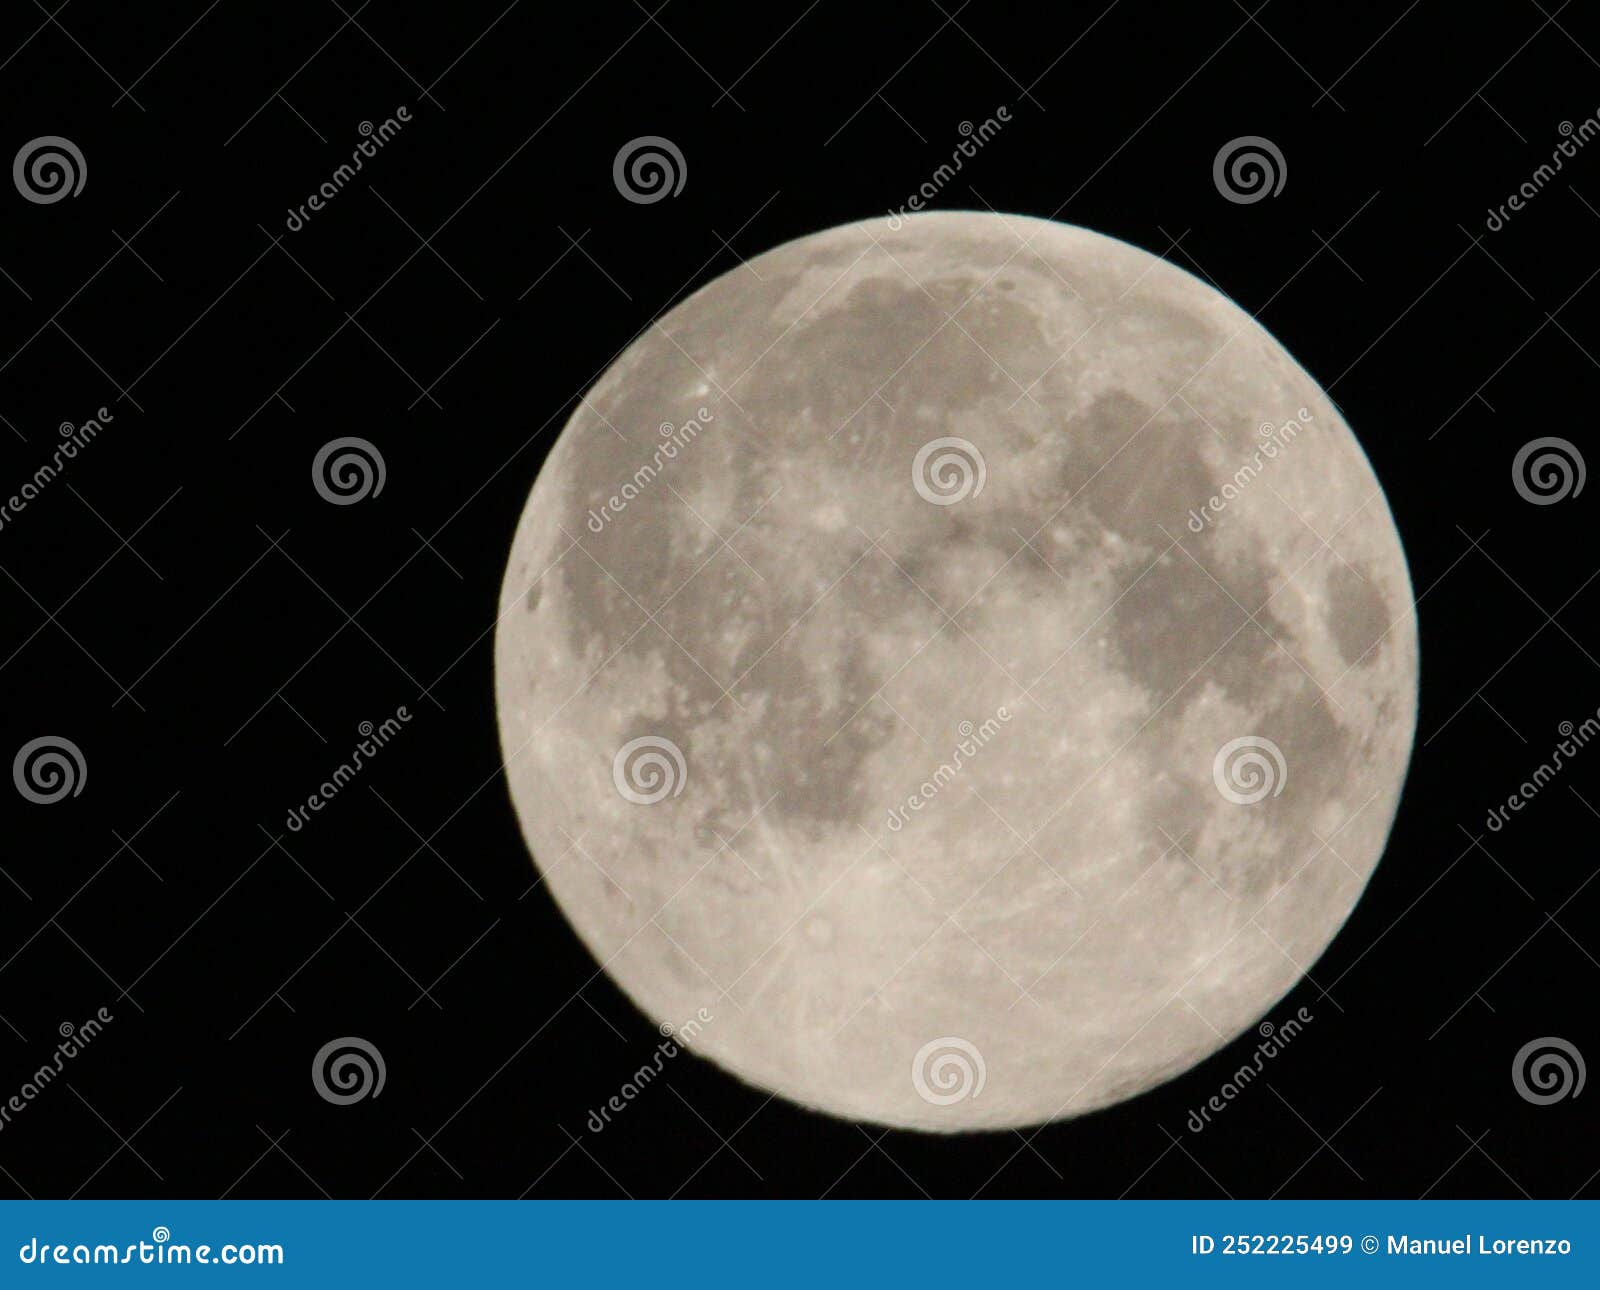 satellite moon crater large round beautiful light bright